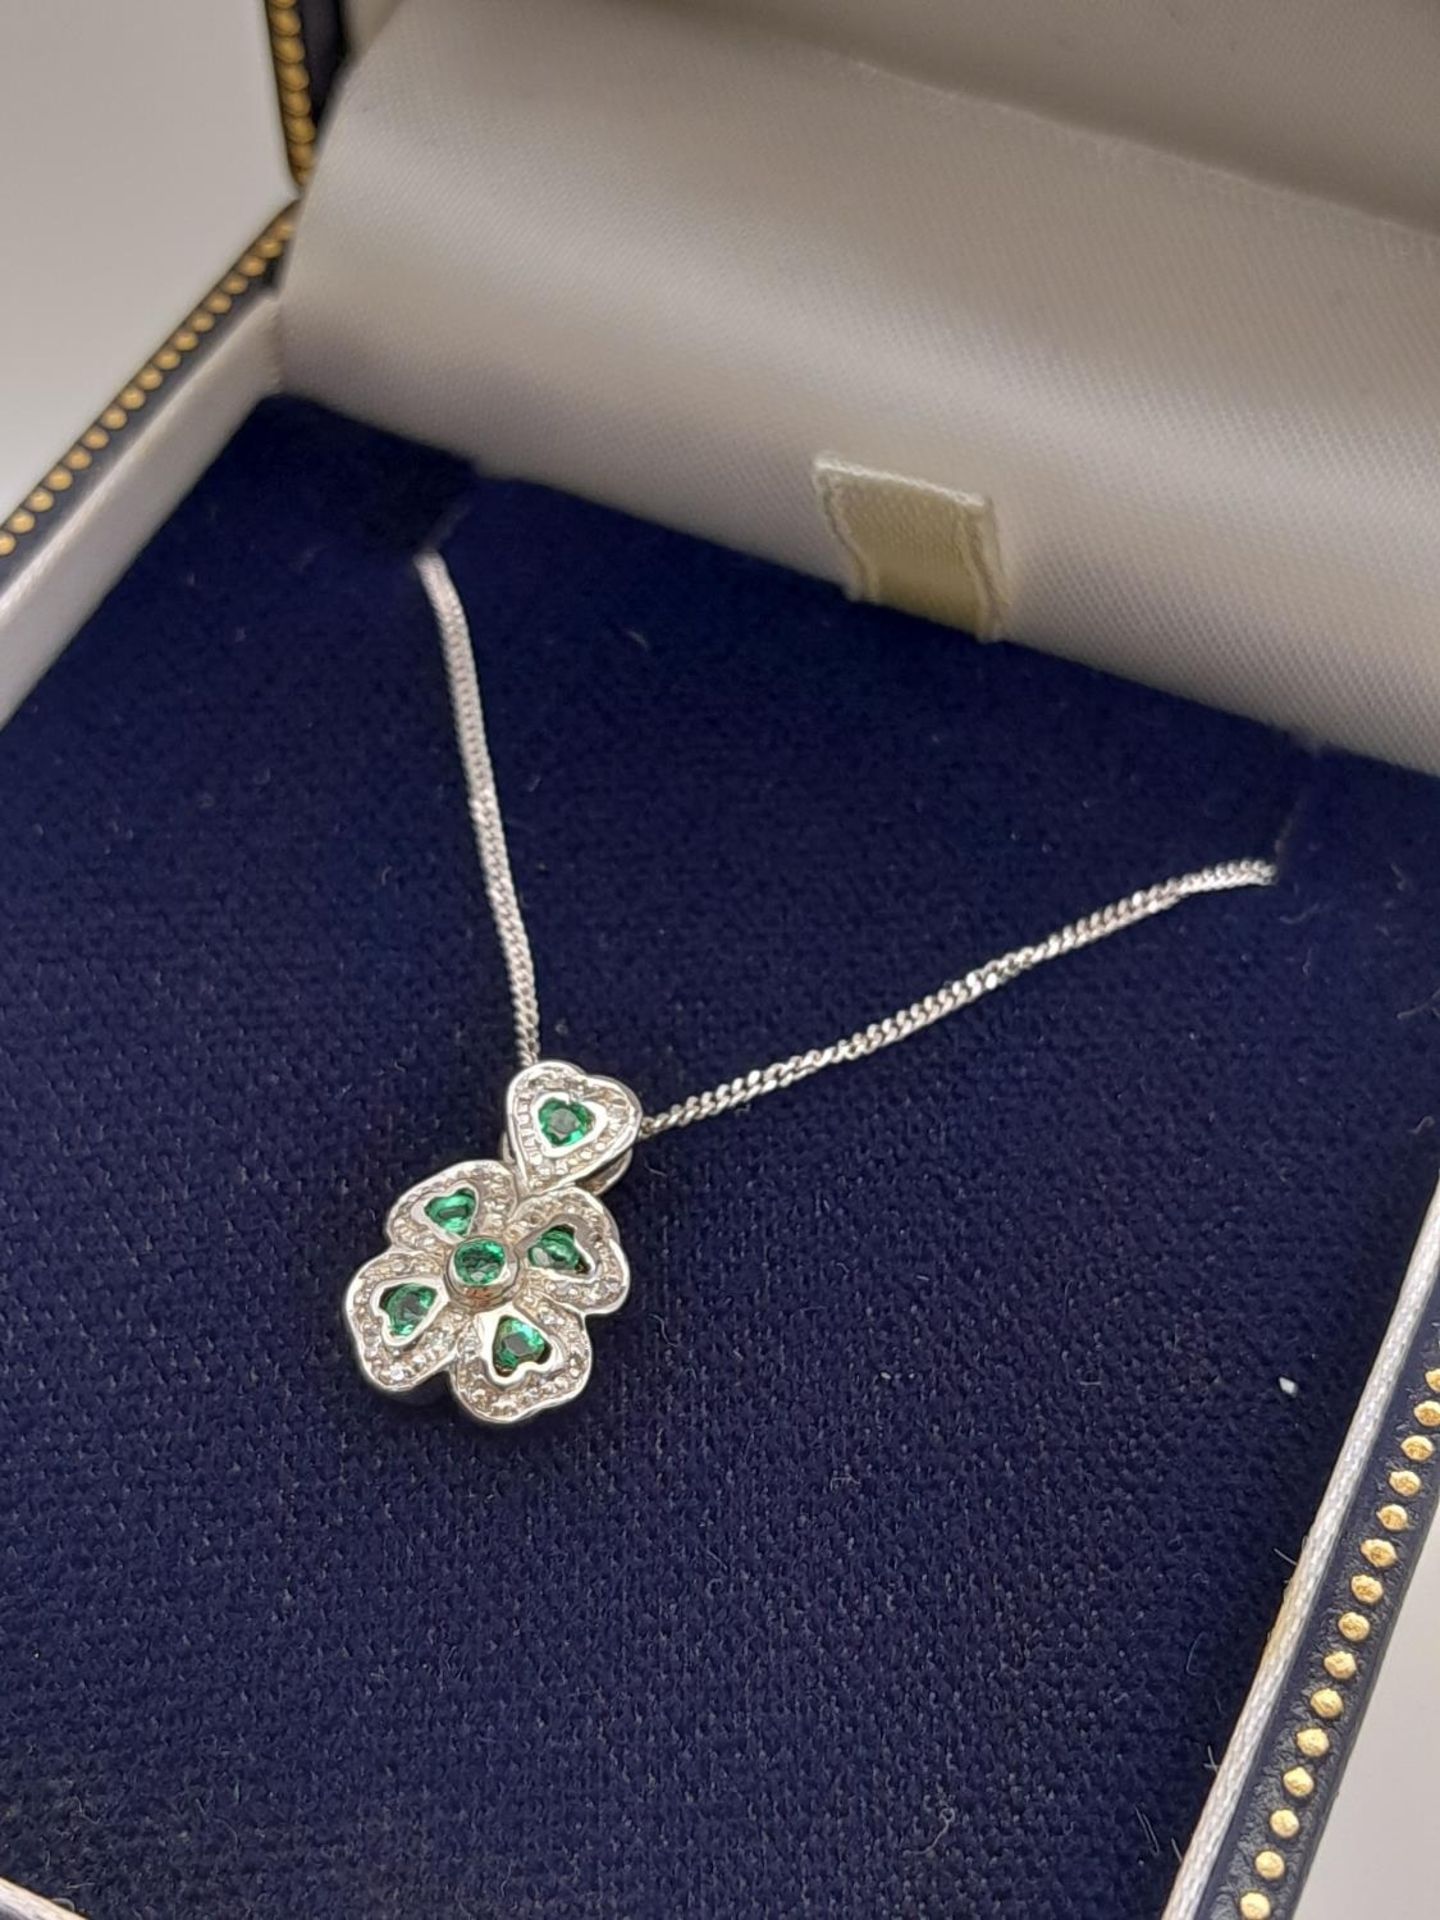 A 9K White Gold Emerald Clover Pendant on Necklace. Comes with presentation case. 1.4cm pendant, - Bild 6 aus 8